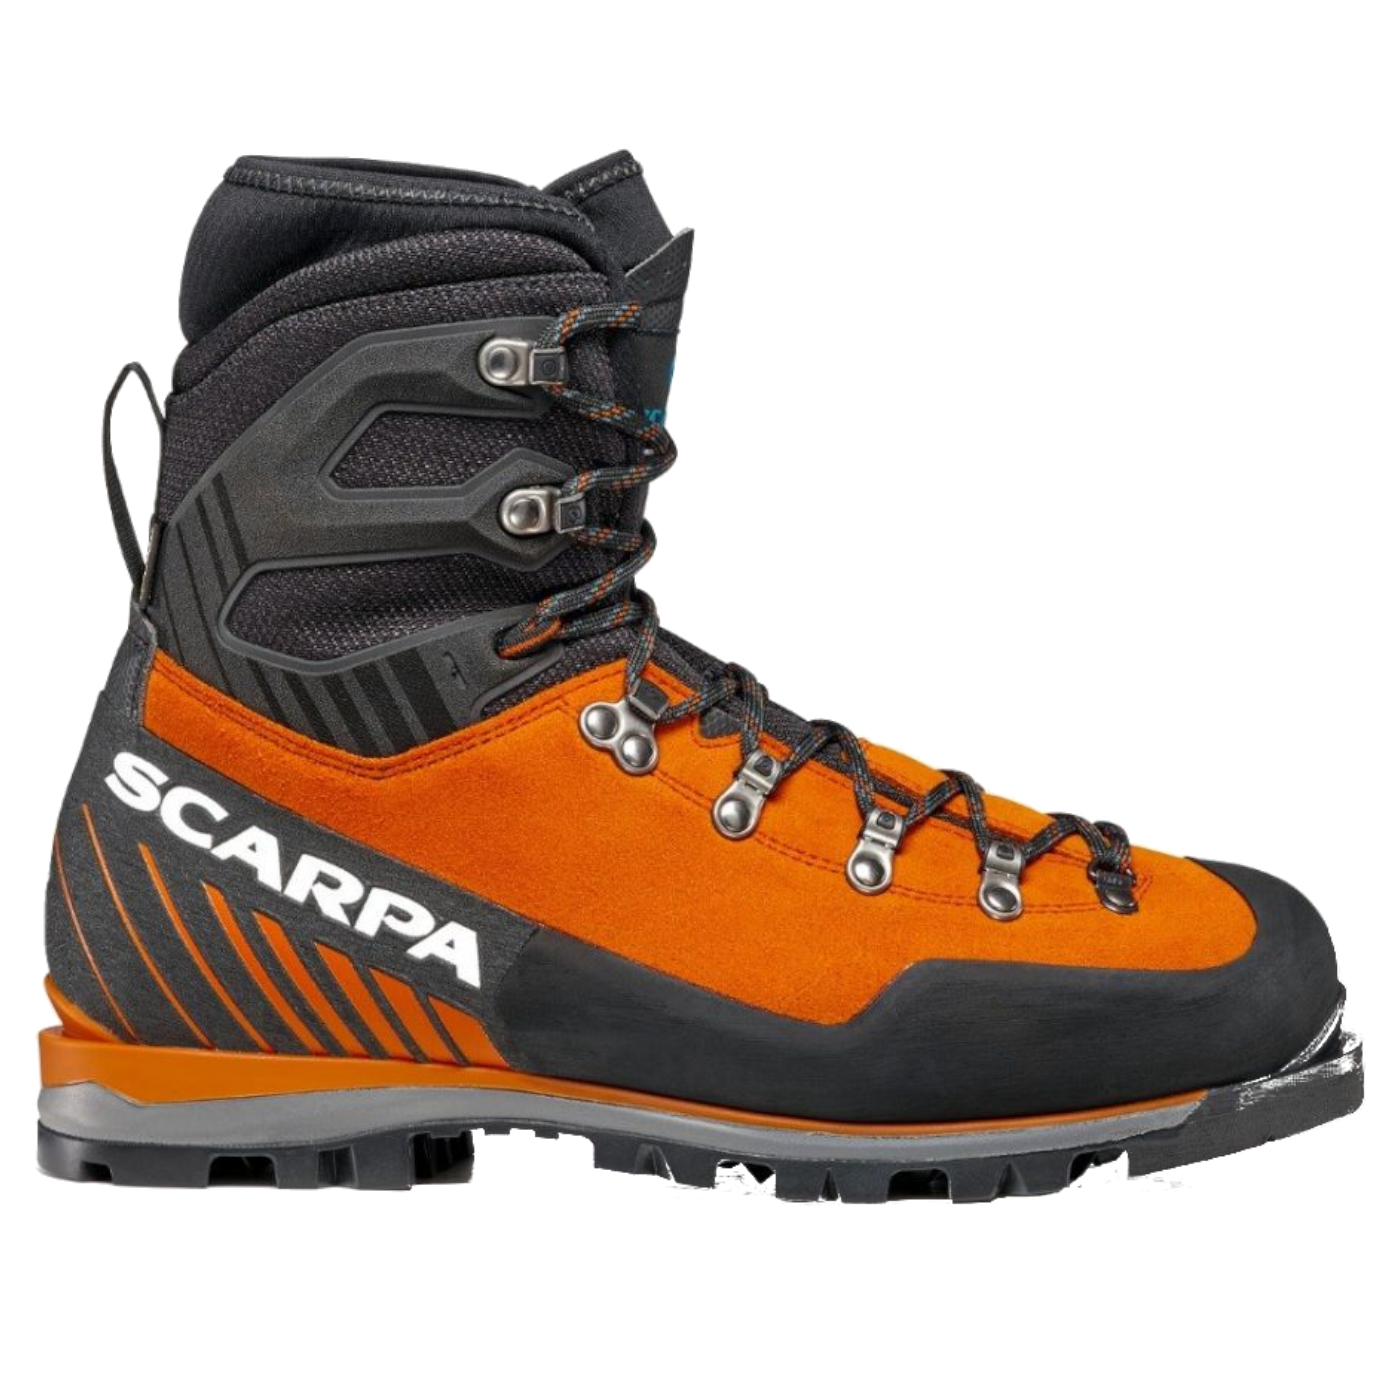 Scarpa Mont Blanc Pro GTX Size 42.5 Mountaineering Boot